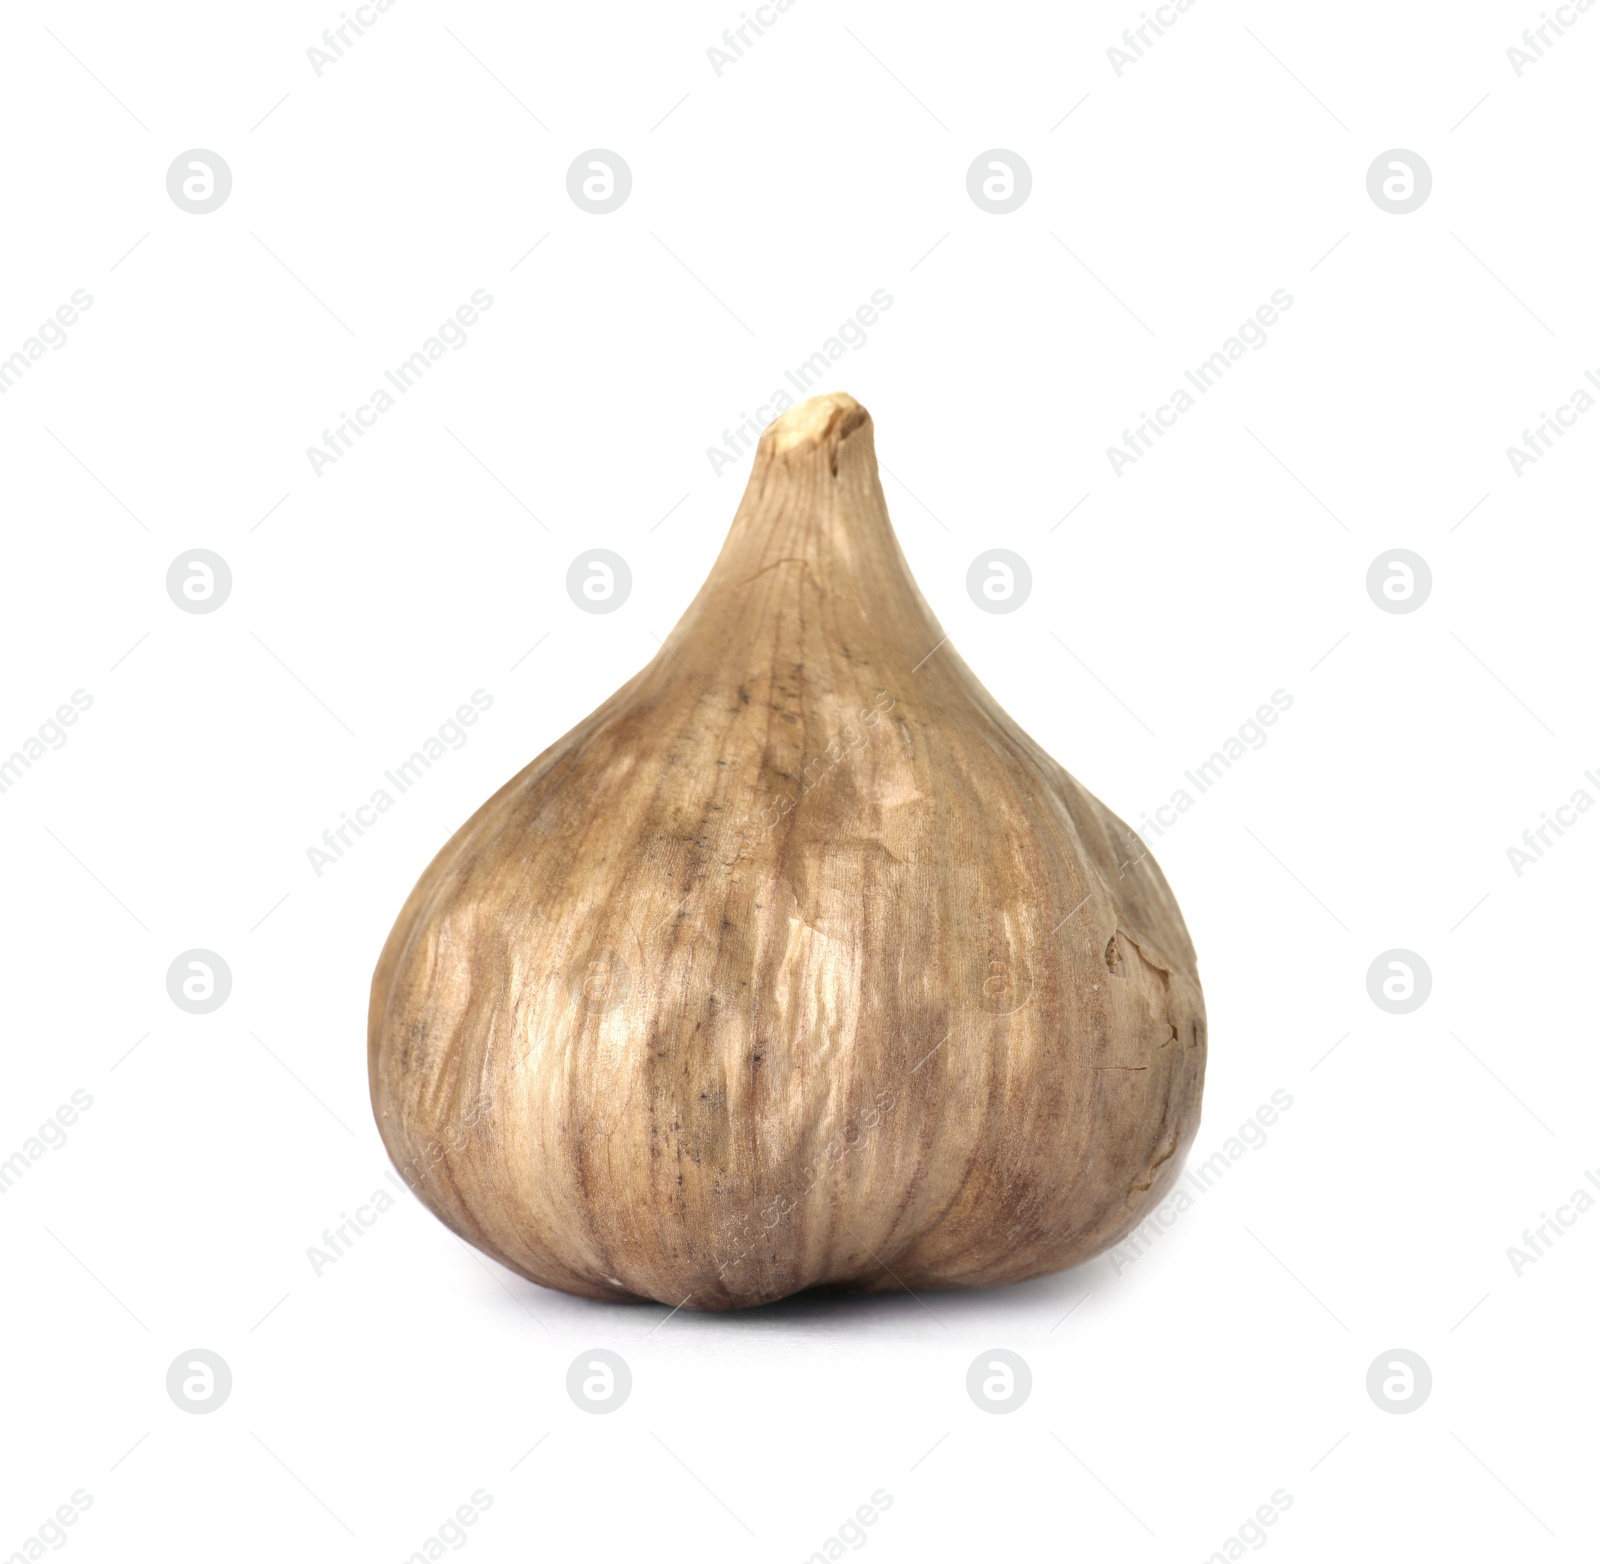 Photo of Unpeeled bulb of black garlic on white background